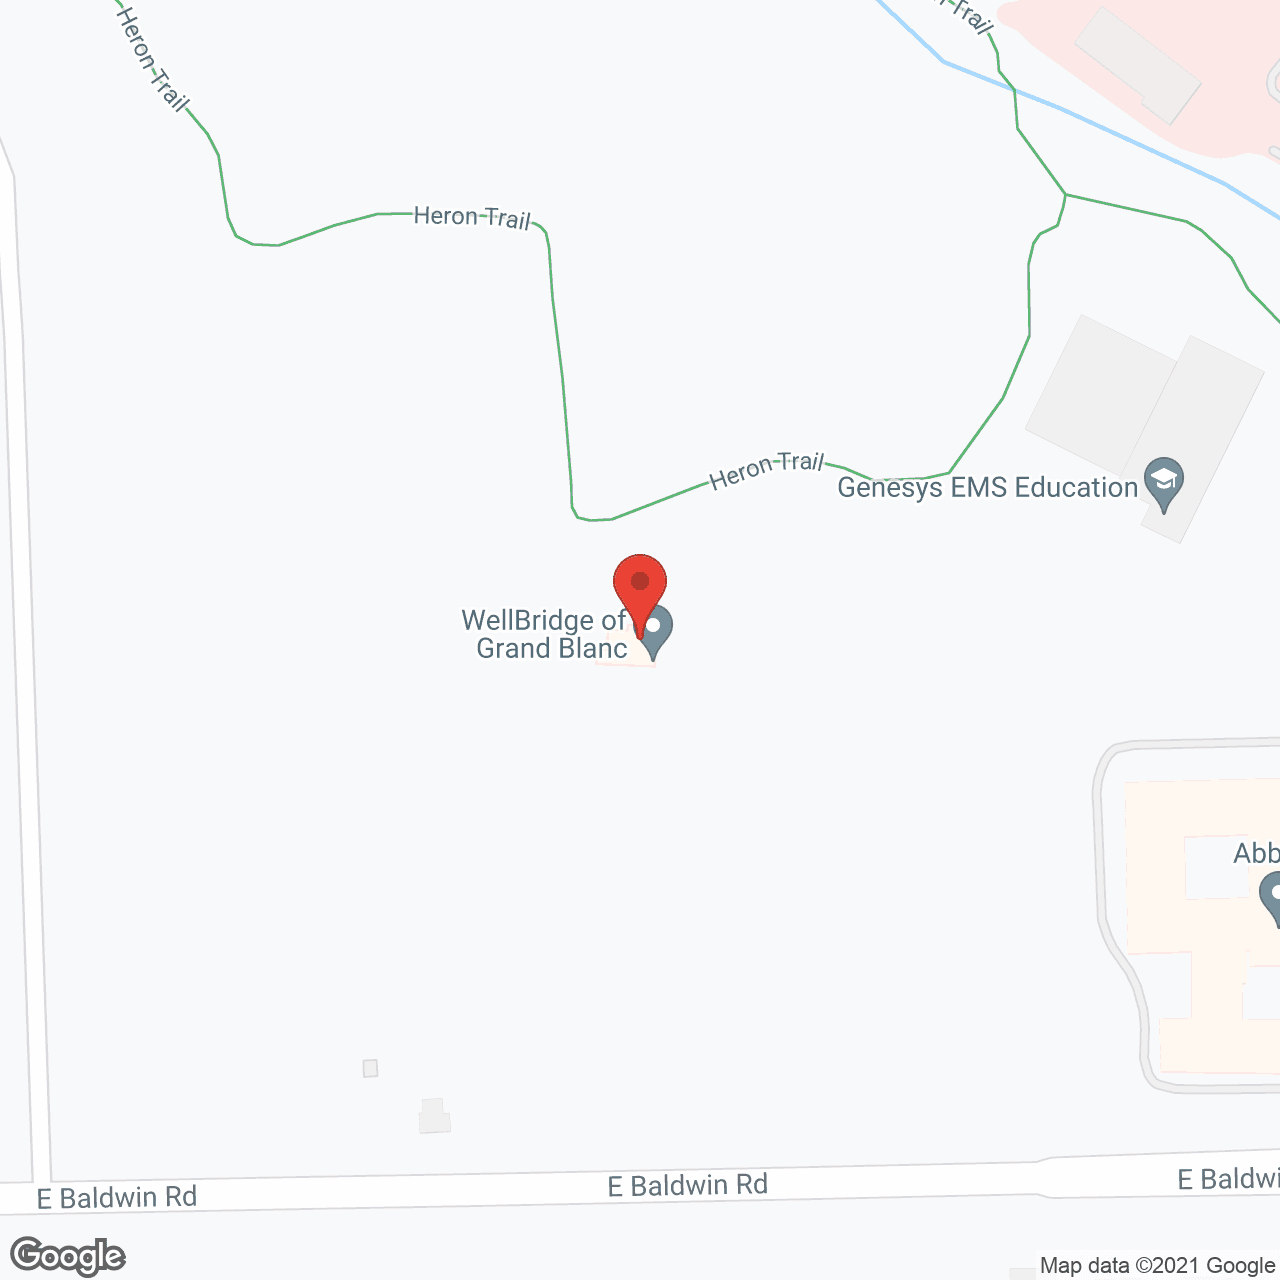 Wellbridge Of Grand Blanc in google map